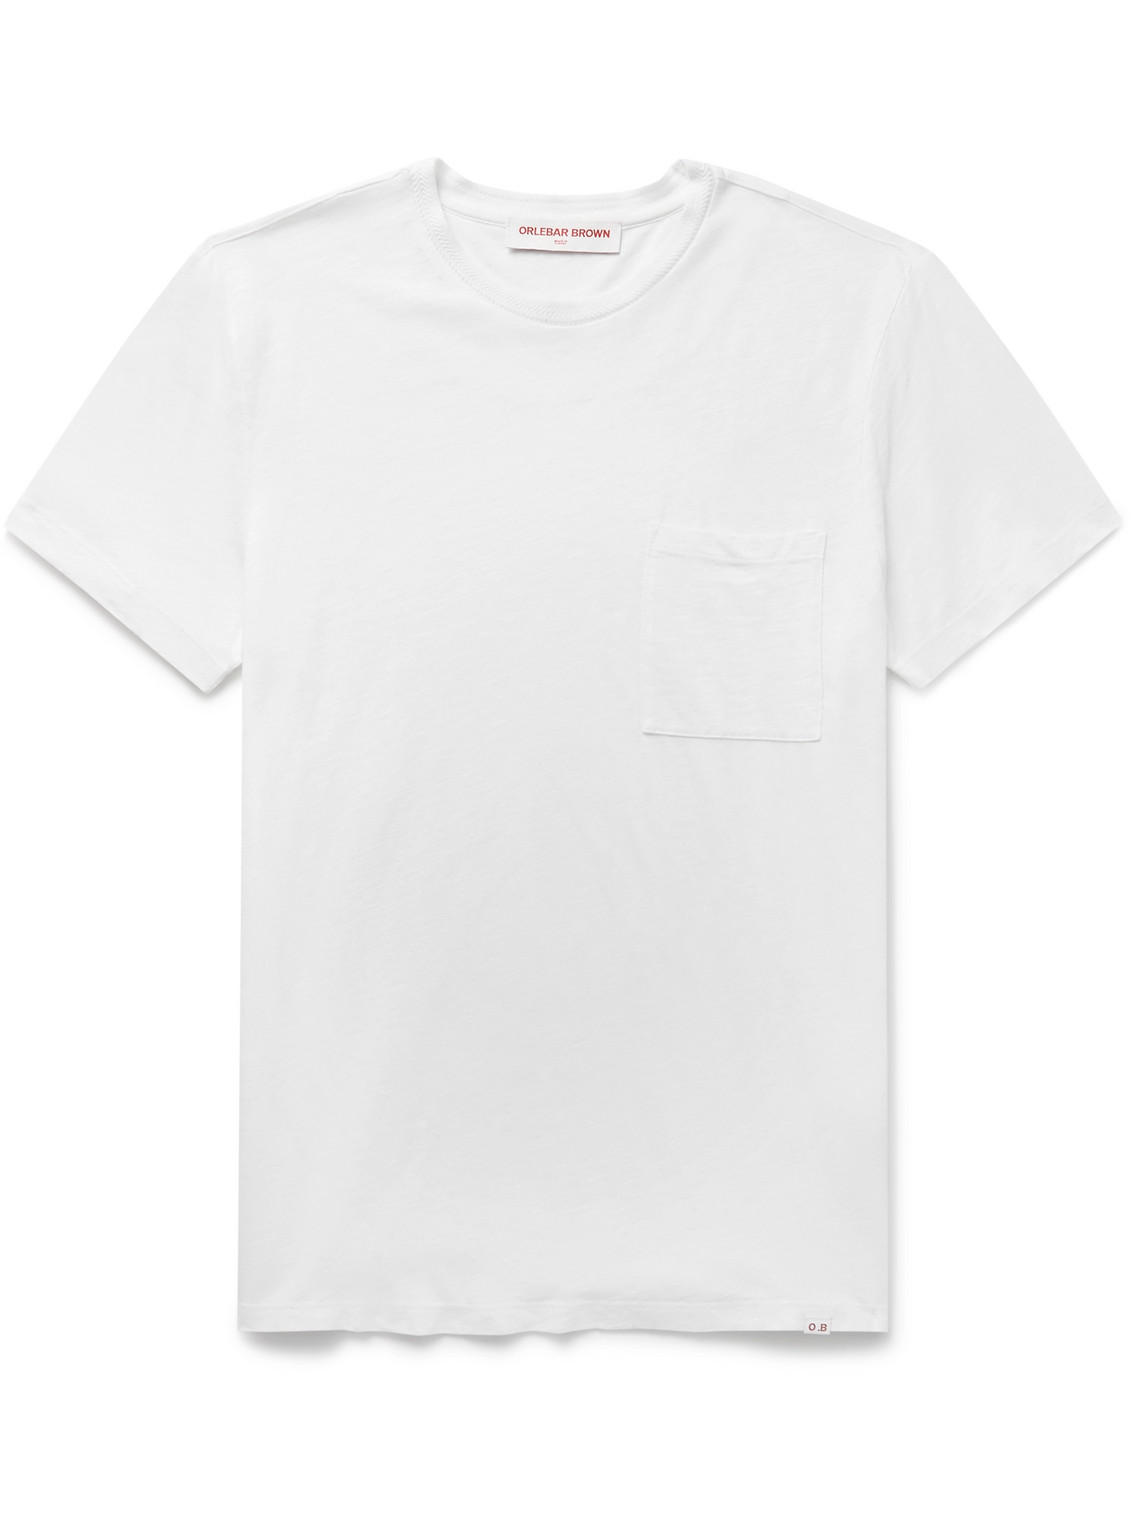 Orlebar Brown Ob Classic Slim-fit Garment-dyed Slub Cotton-jersey T-shirt In White